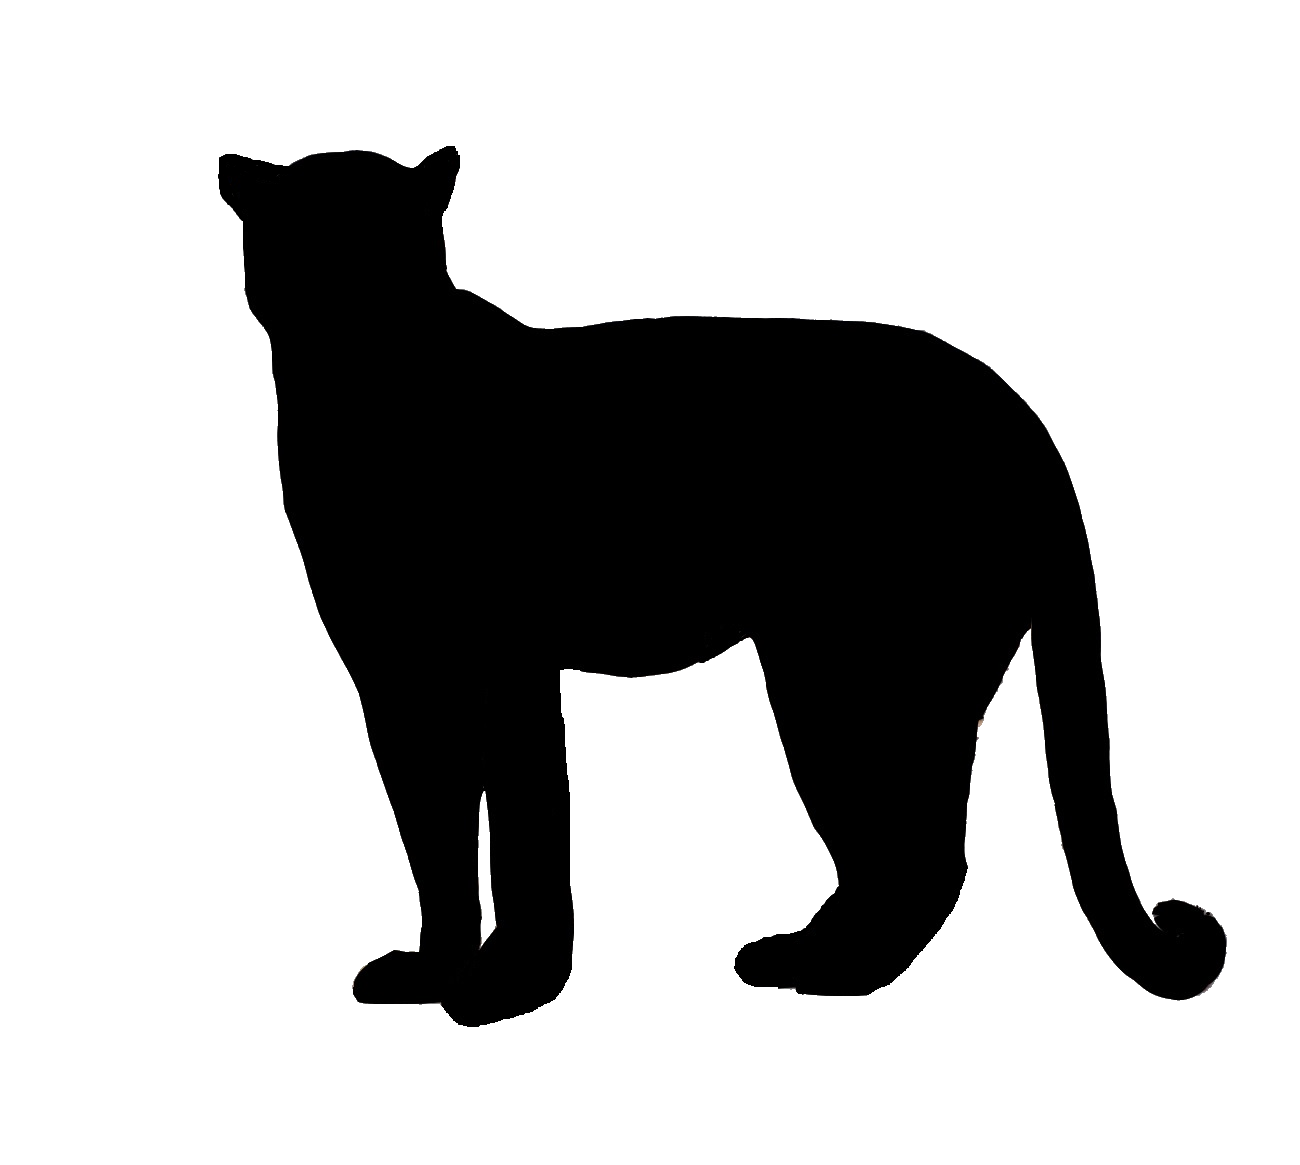 Panther profile